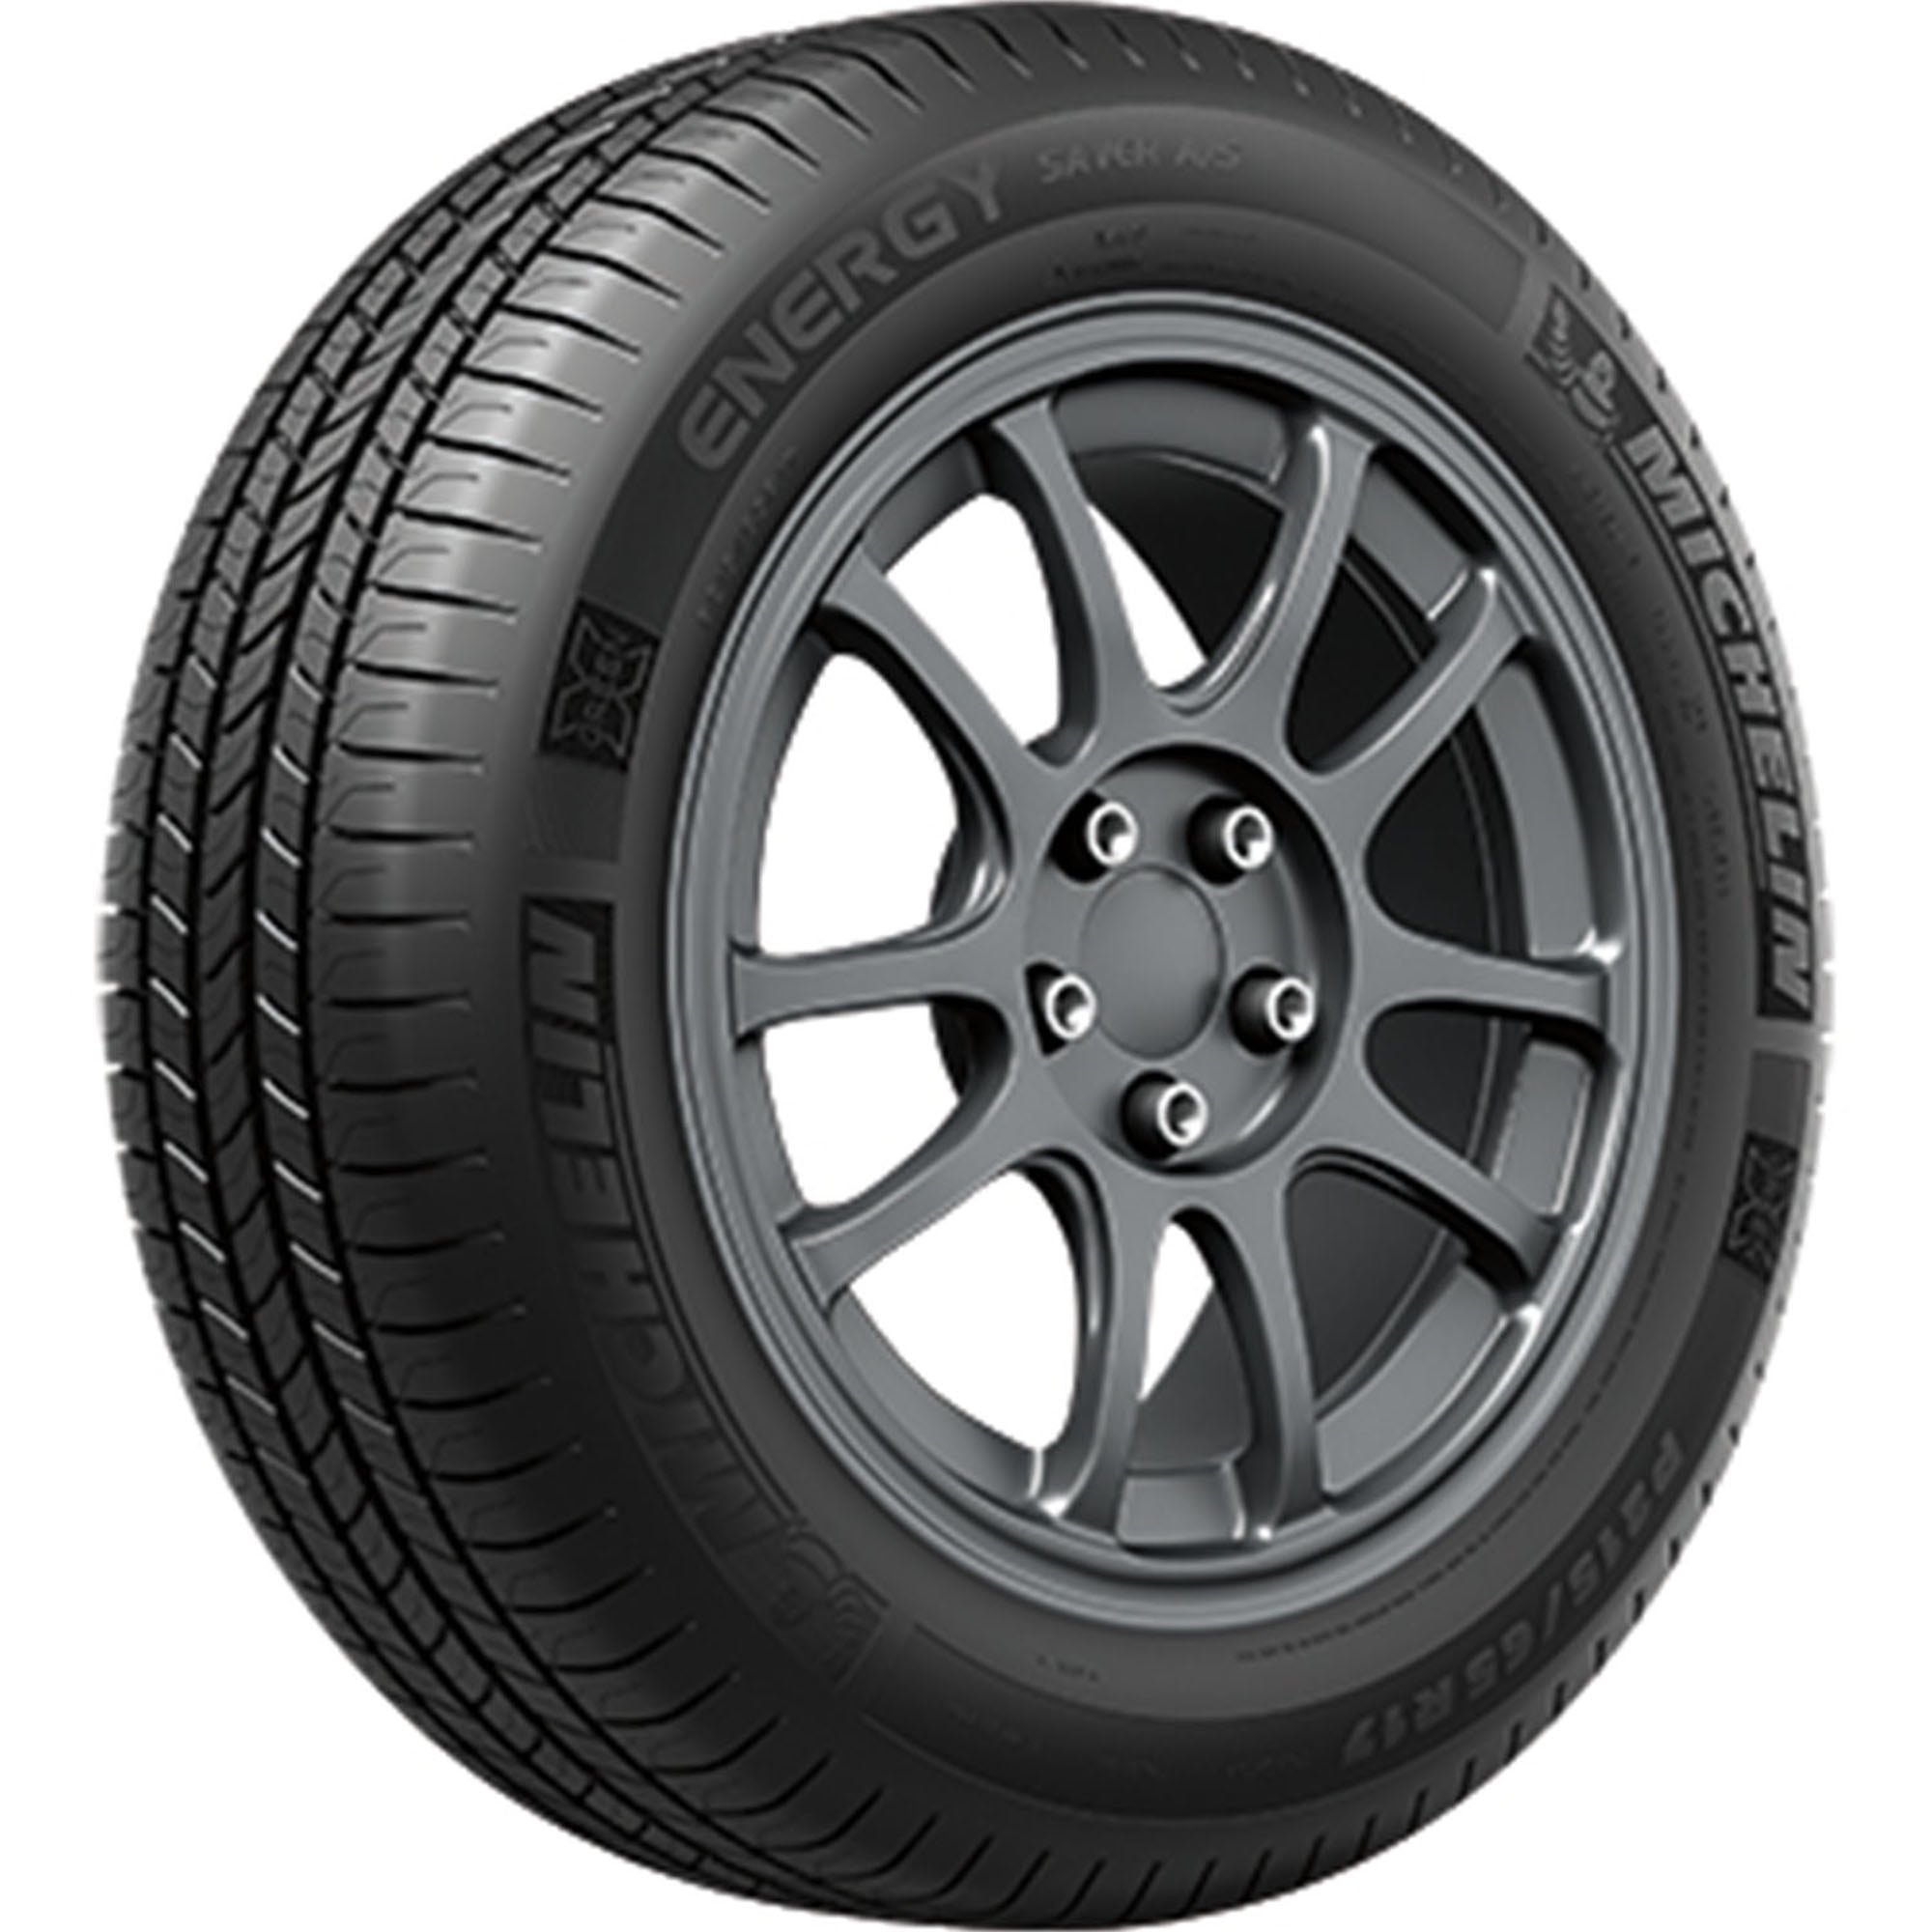 Michelin Energy Saver Passenger 205/55R16 All Season 91H Tire A/S